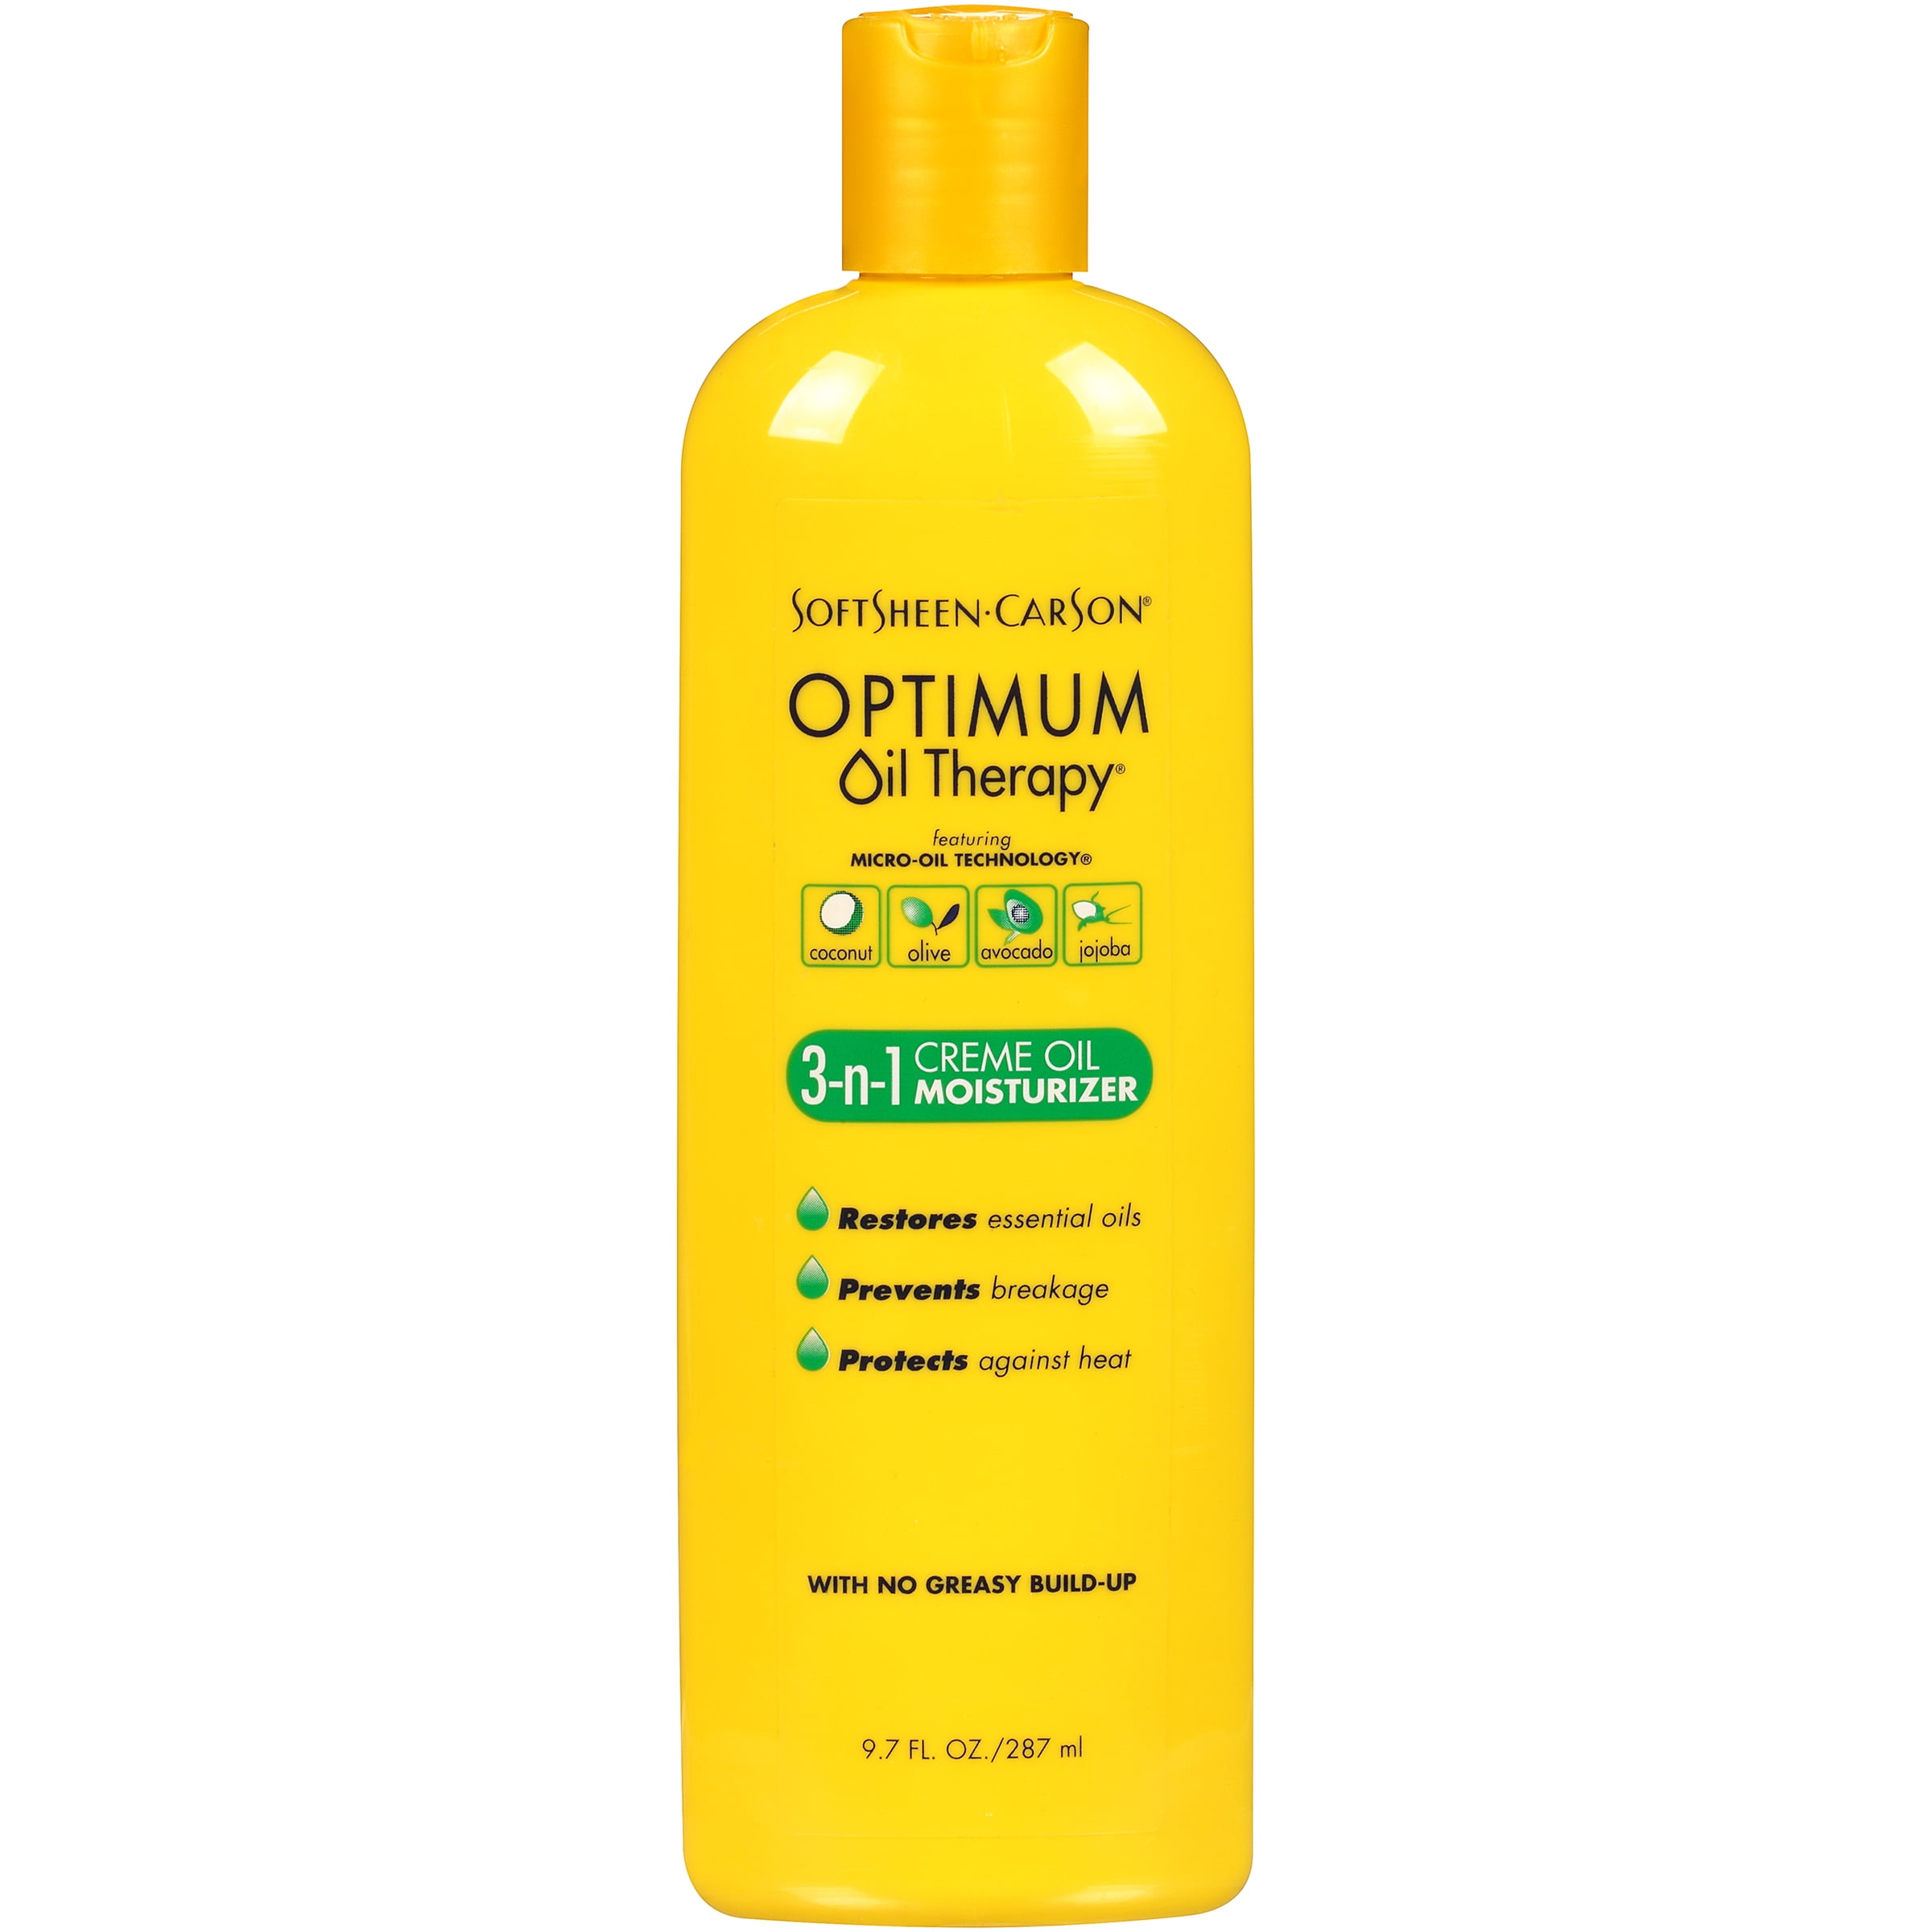 Photo 1 of SoftSheen-Carson Optimum Oil Therapy Micro-Oil Technology 3-In-1 Creme Oil Moisturizer, 9.7 fl oz